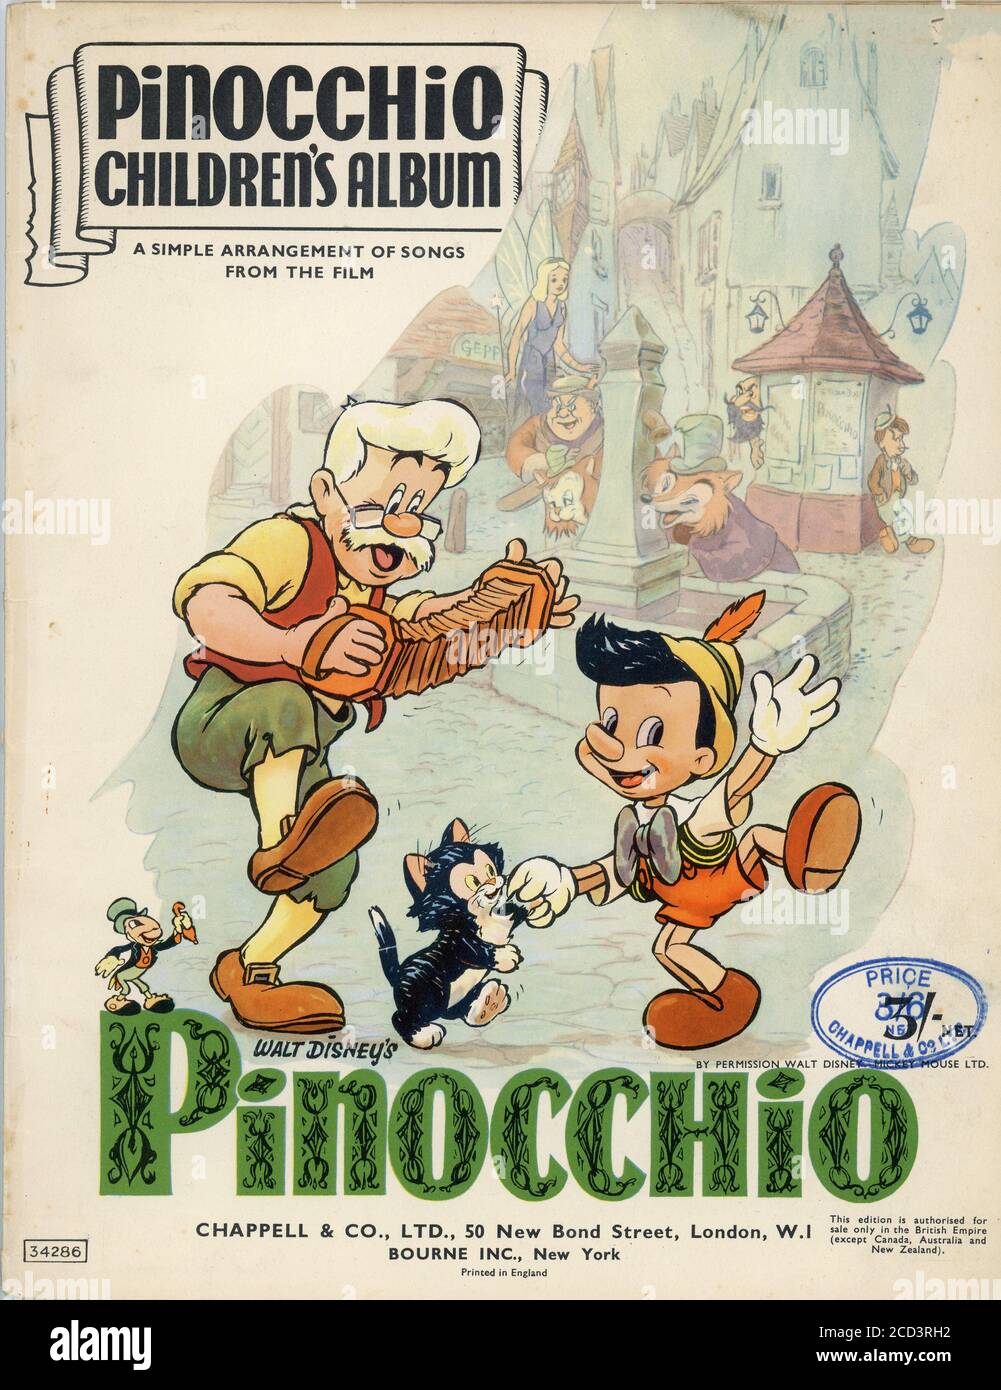 Sheet Music - Pinocchio - music from the 1940 film Stock Photo